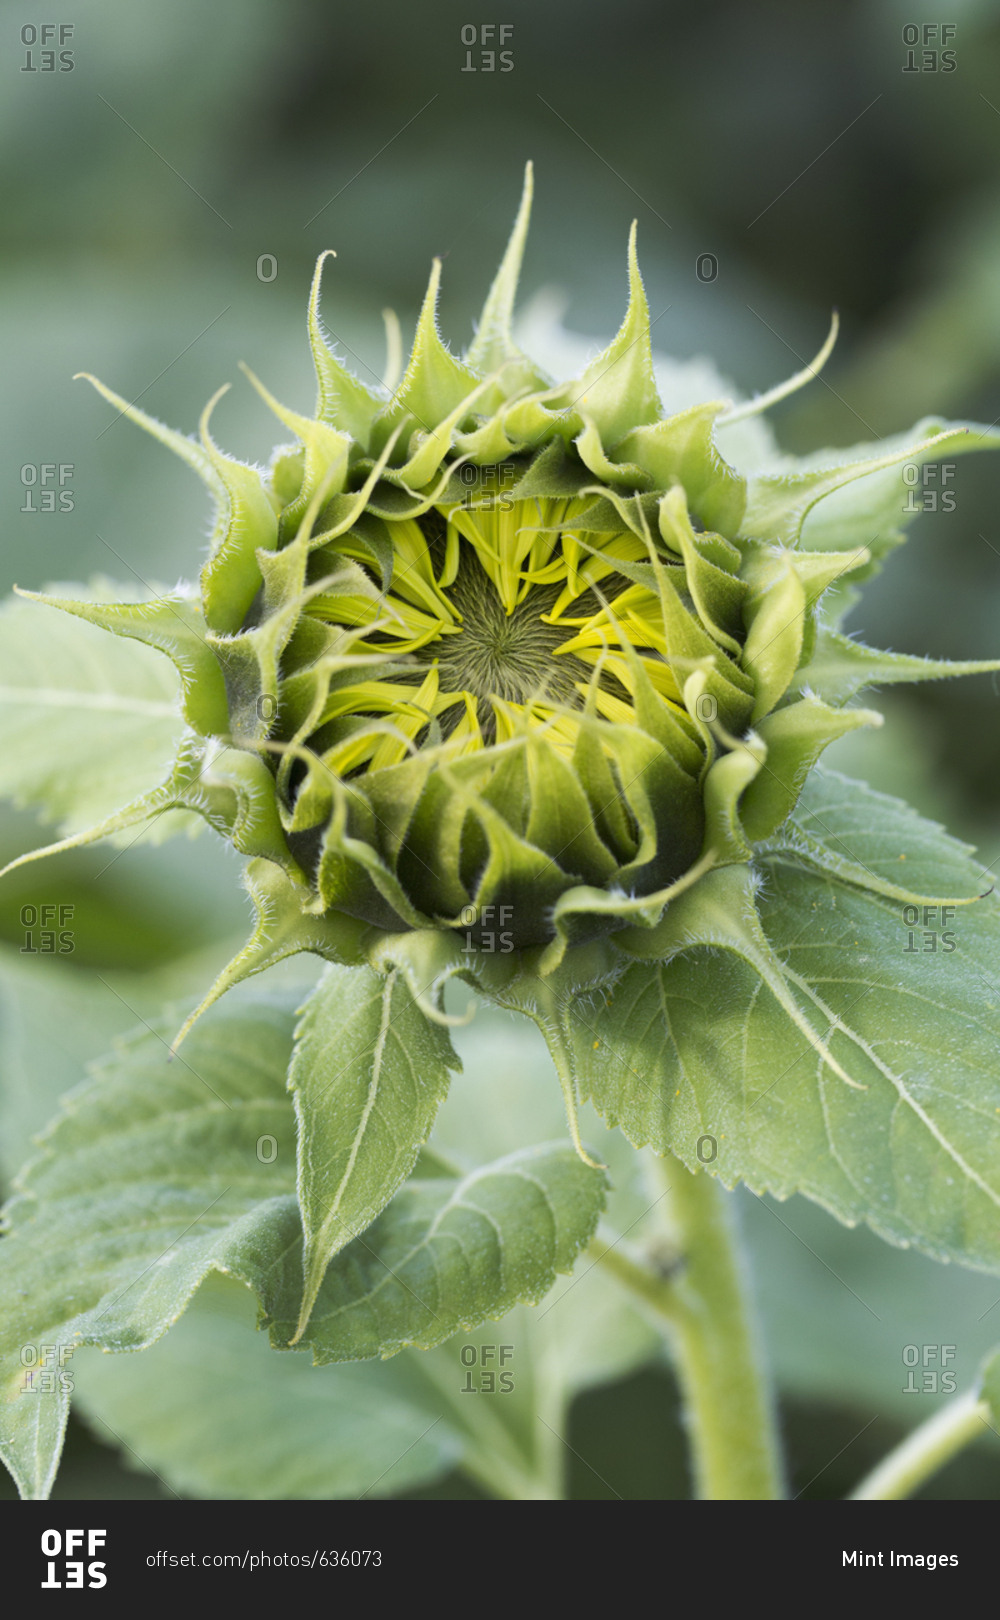 Close up of flower head of sunflower.